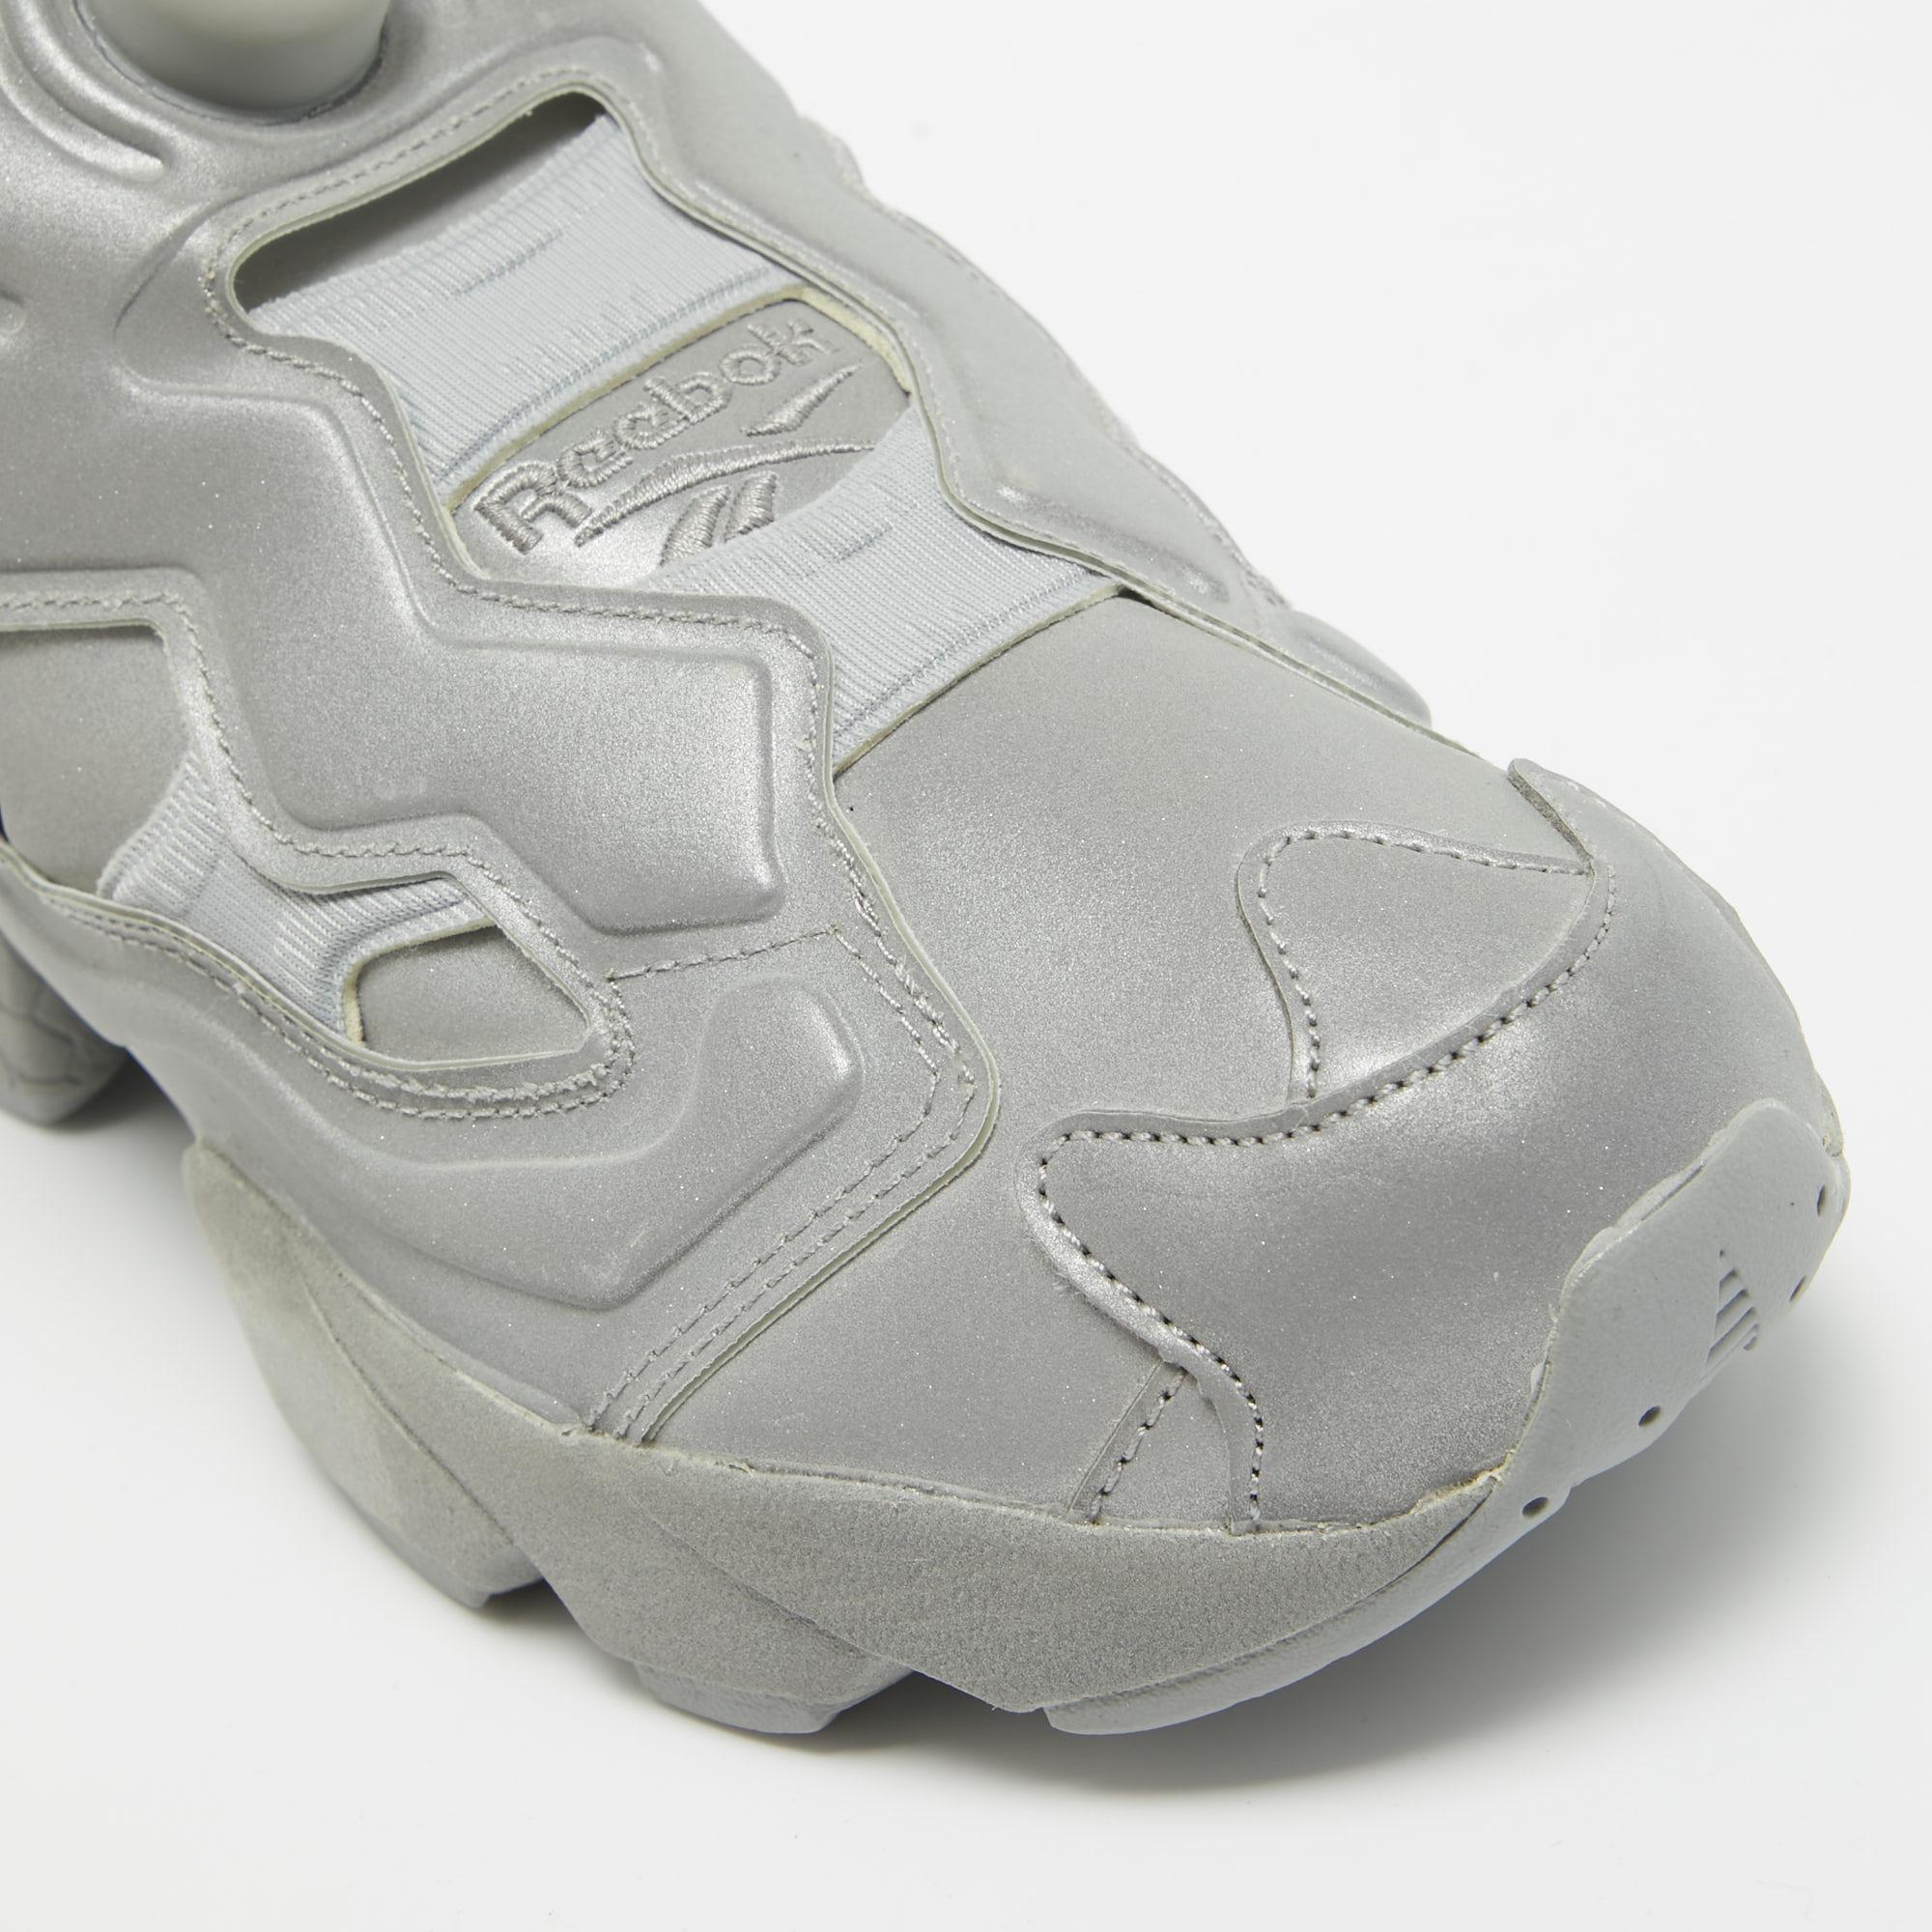 Vetements x Reebok Grey Reflective Fabric Instapump Fury Sneakers Size 38.5 For Sale 3